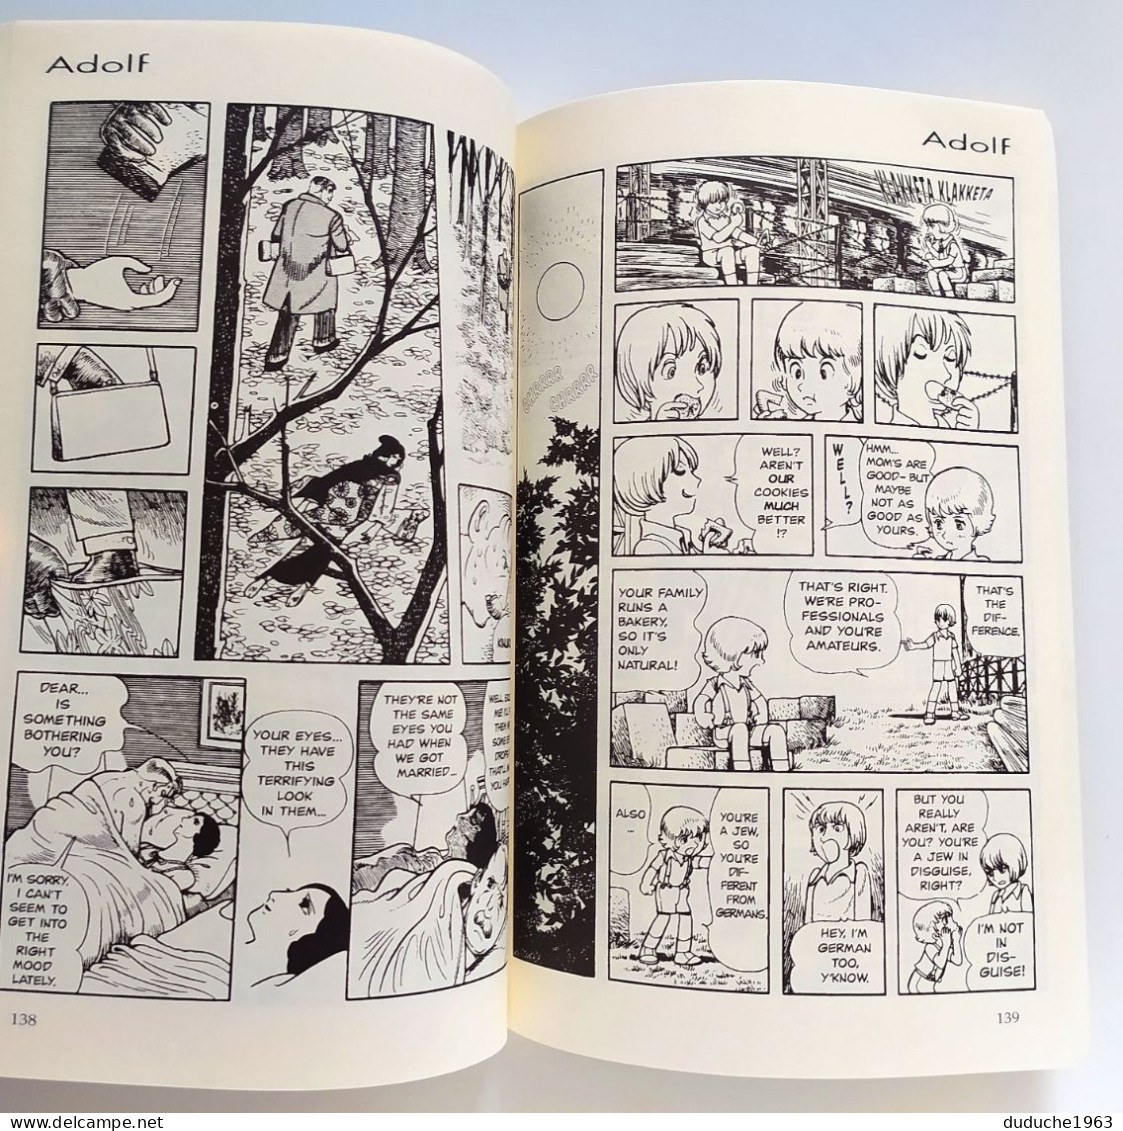 Adolf - A Tale Of The Twentieth Century. Osamu Tezuka - Autres Éditeurs